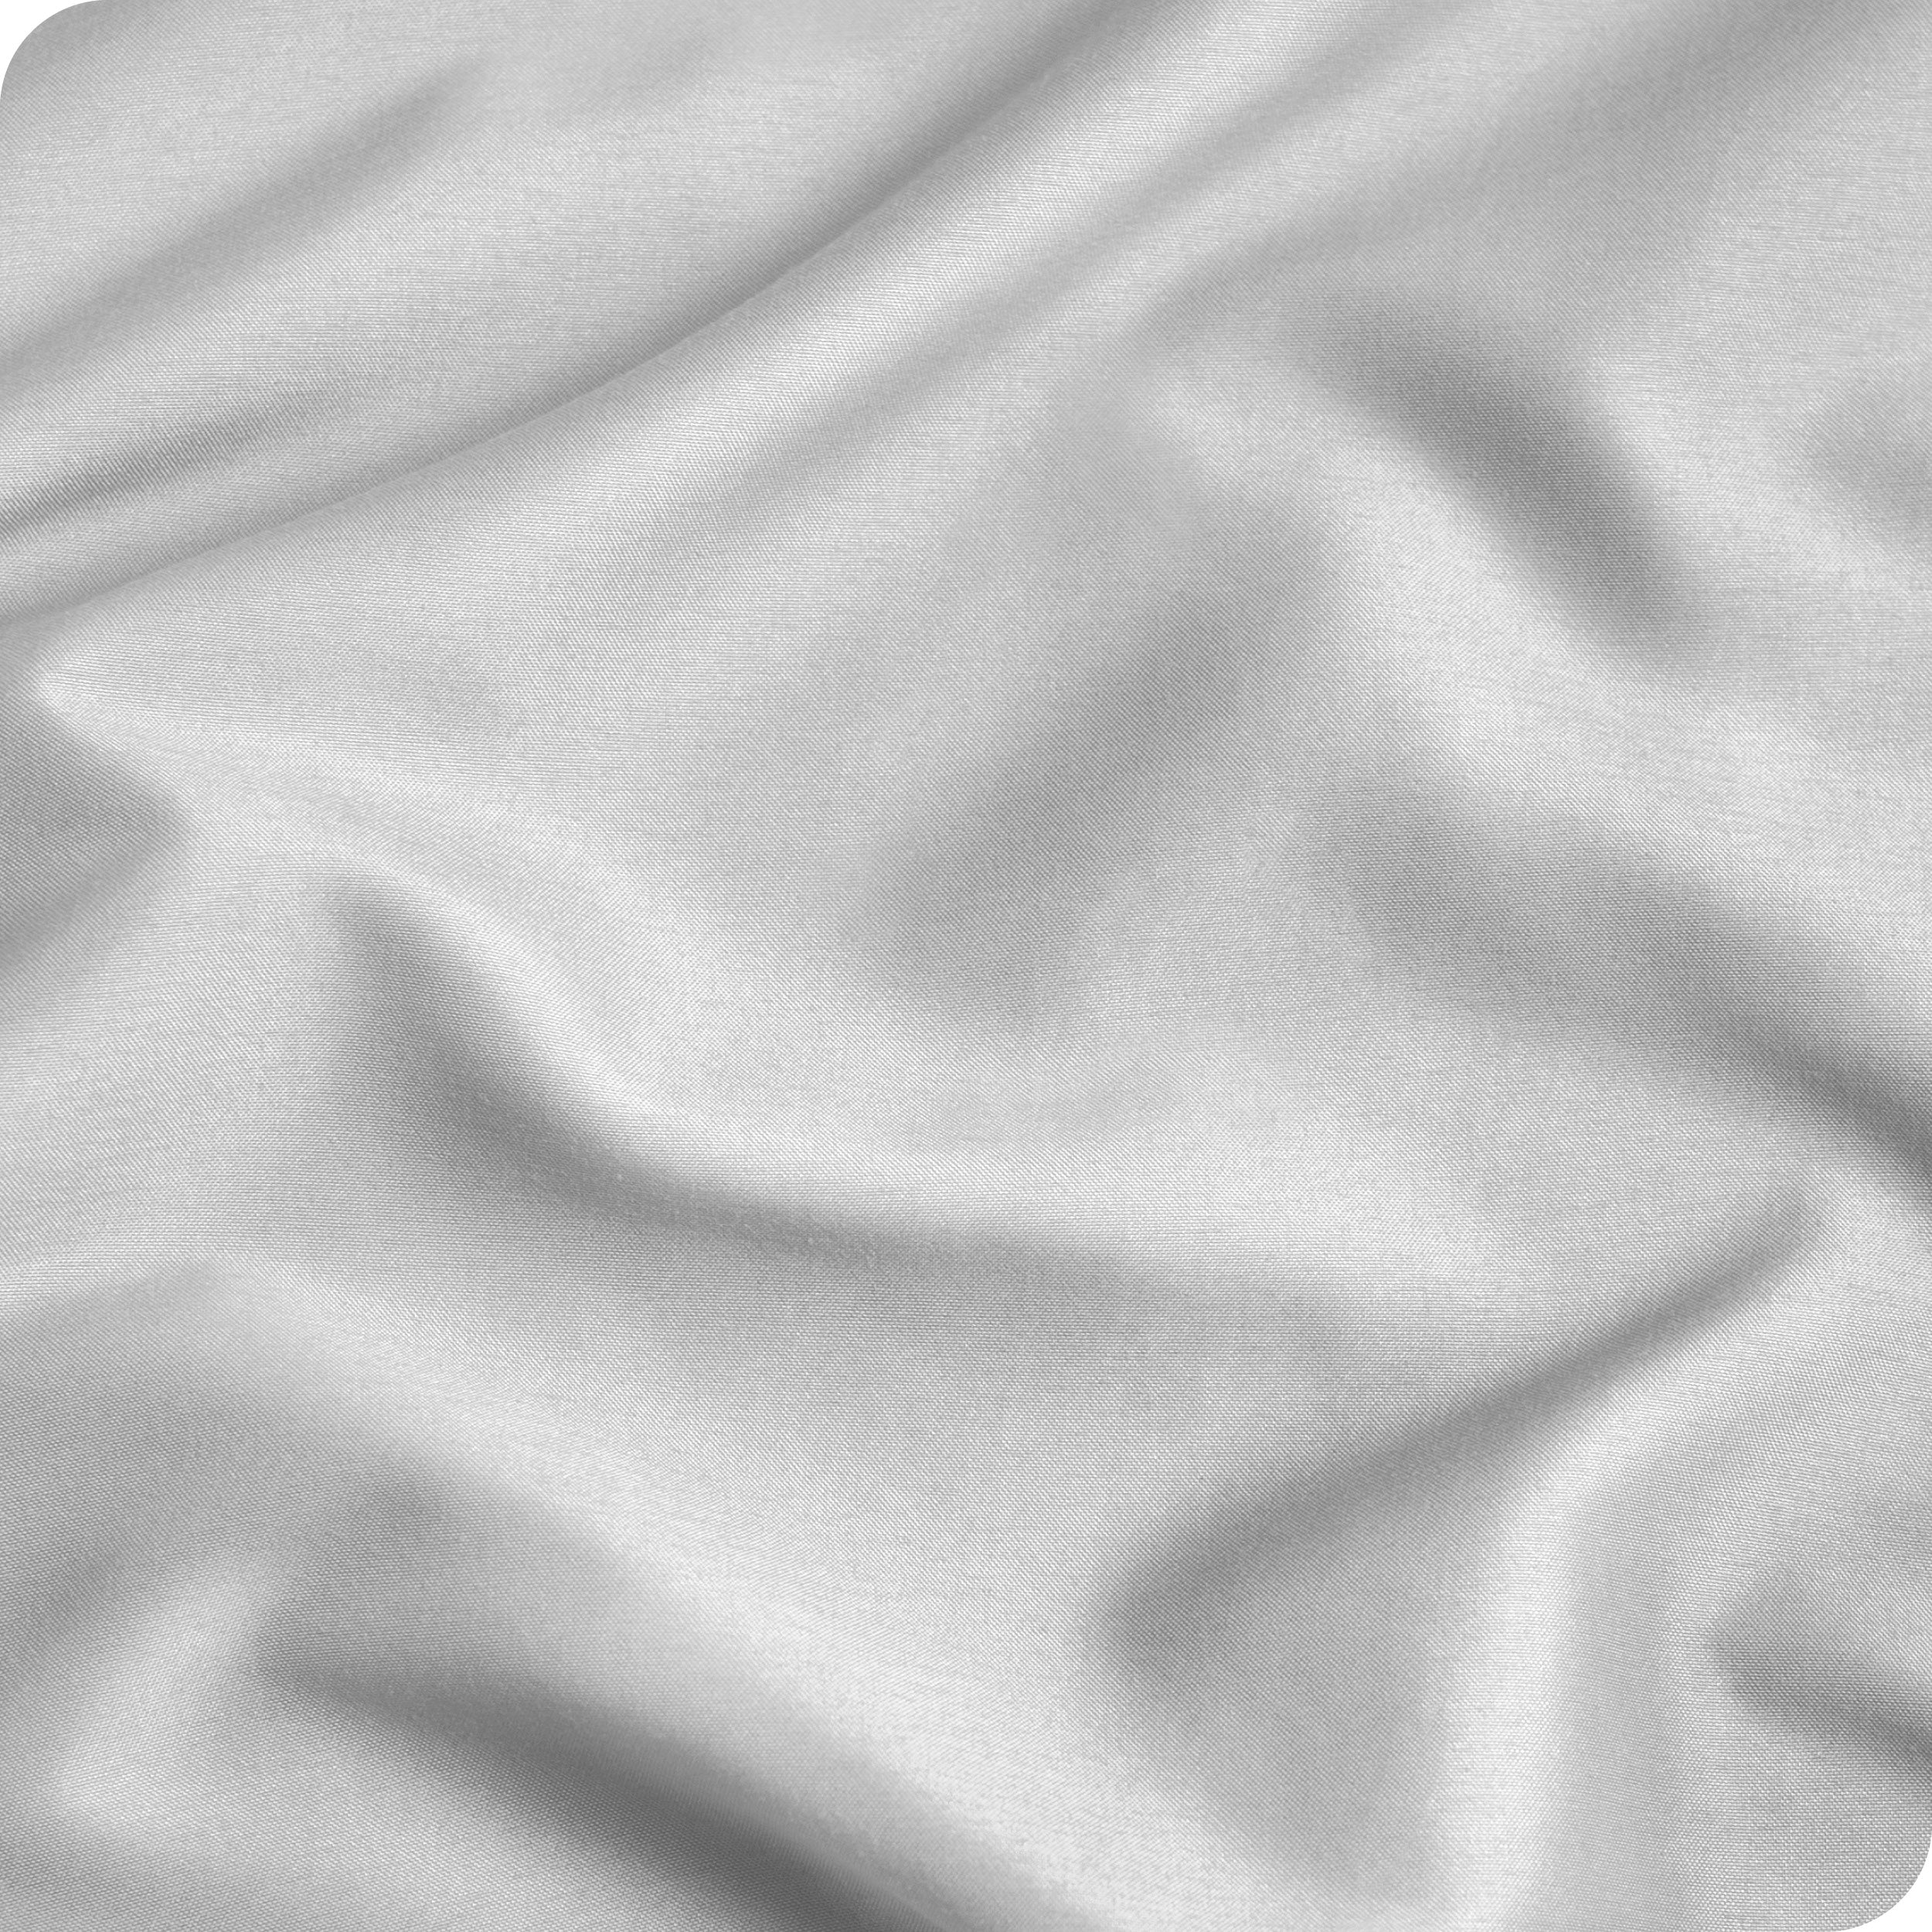 Close up of the microfiber pillowcase fabric